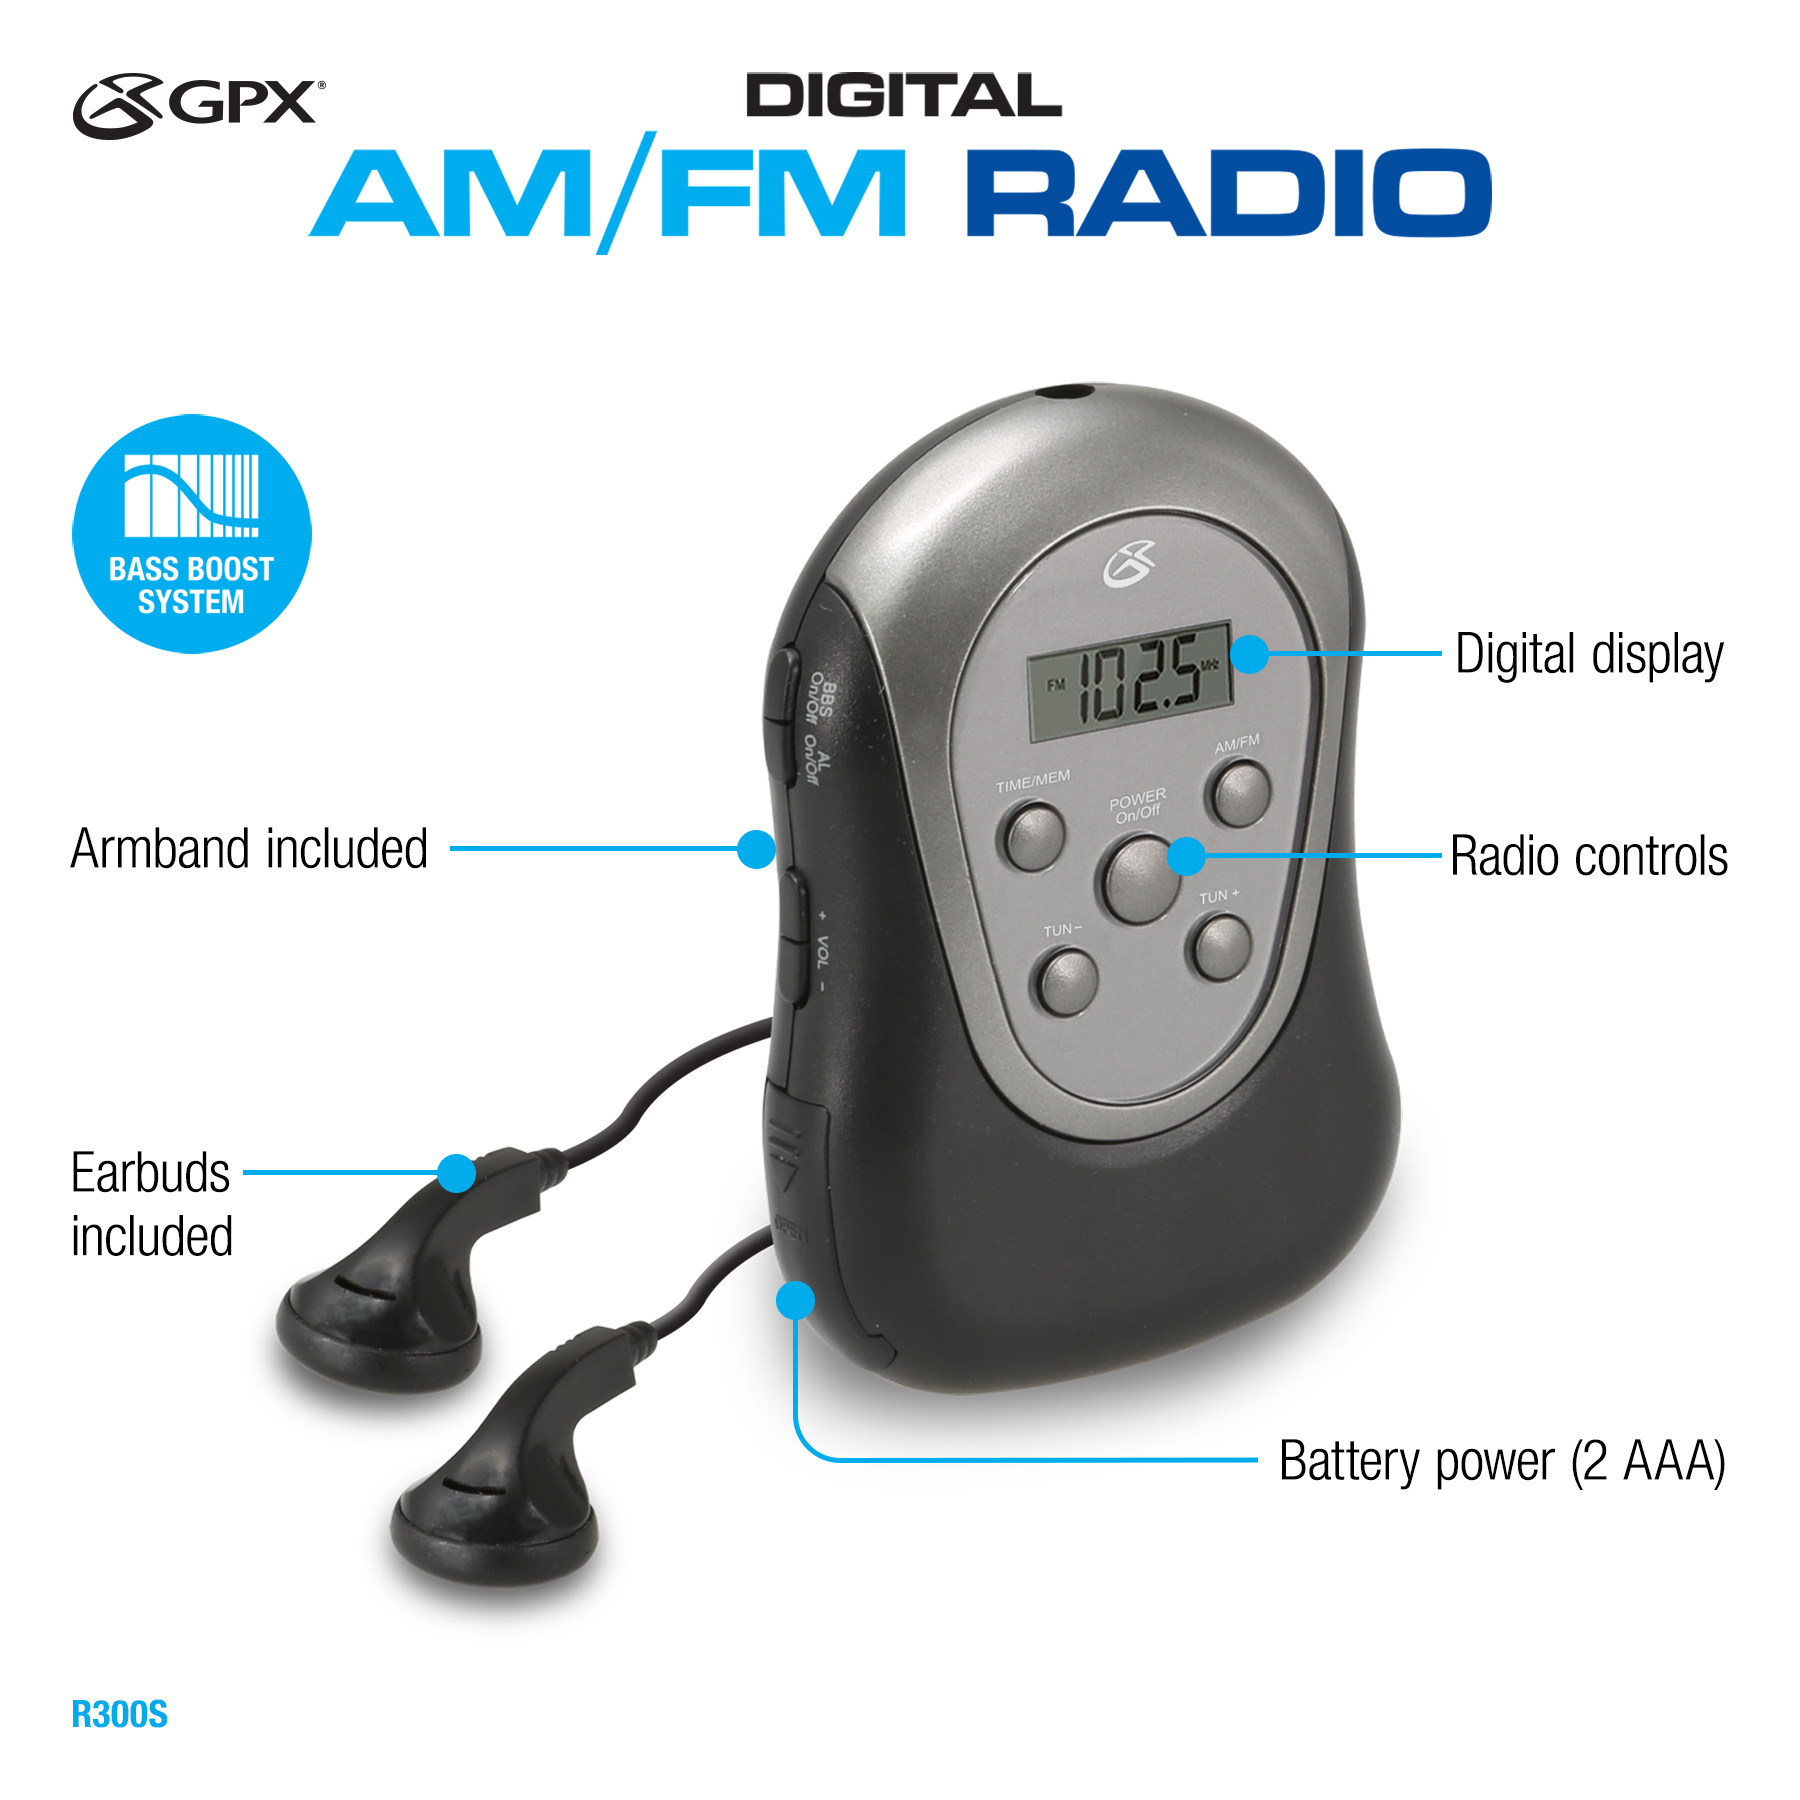 GPX Portable Armband Digital AM/FM Radio, Black/Silver, R300S - image 5 of 8